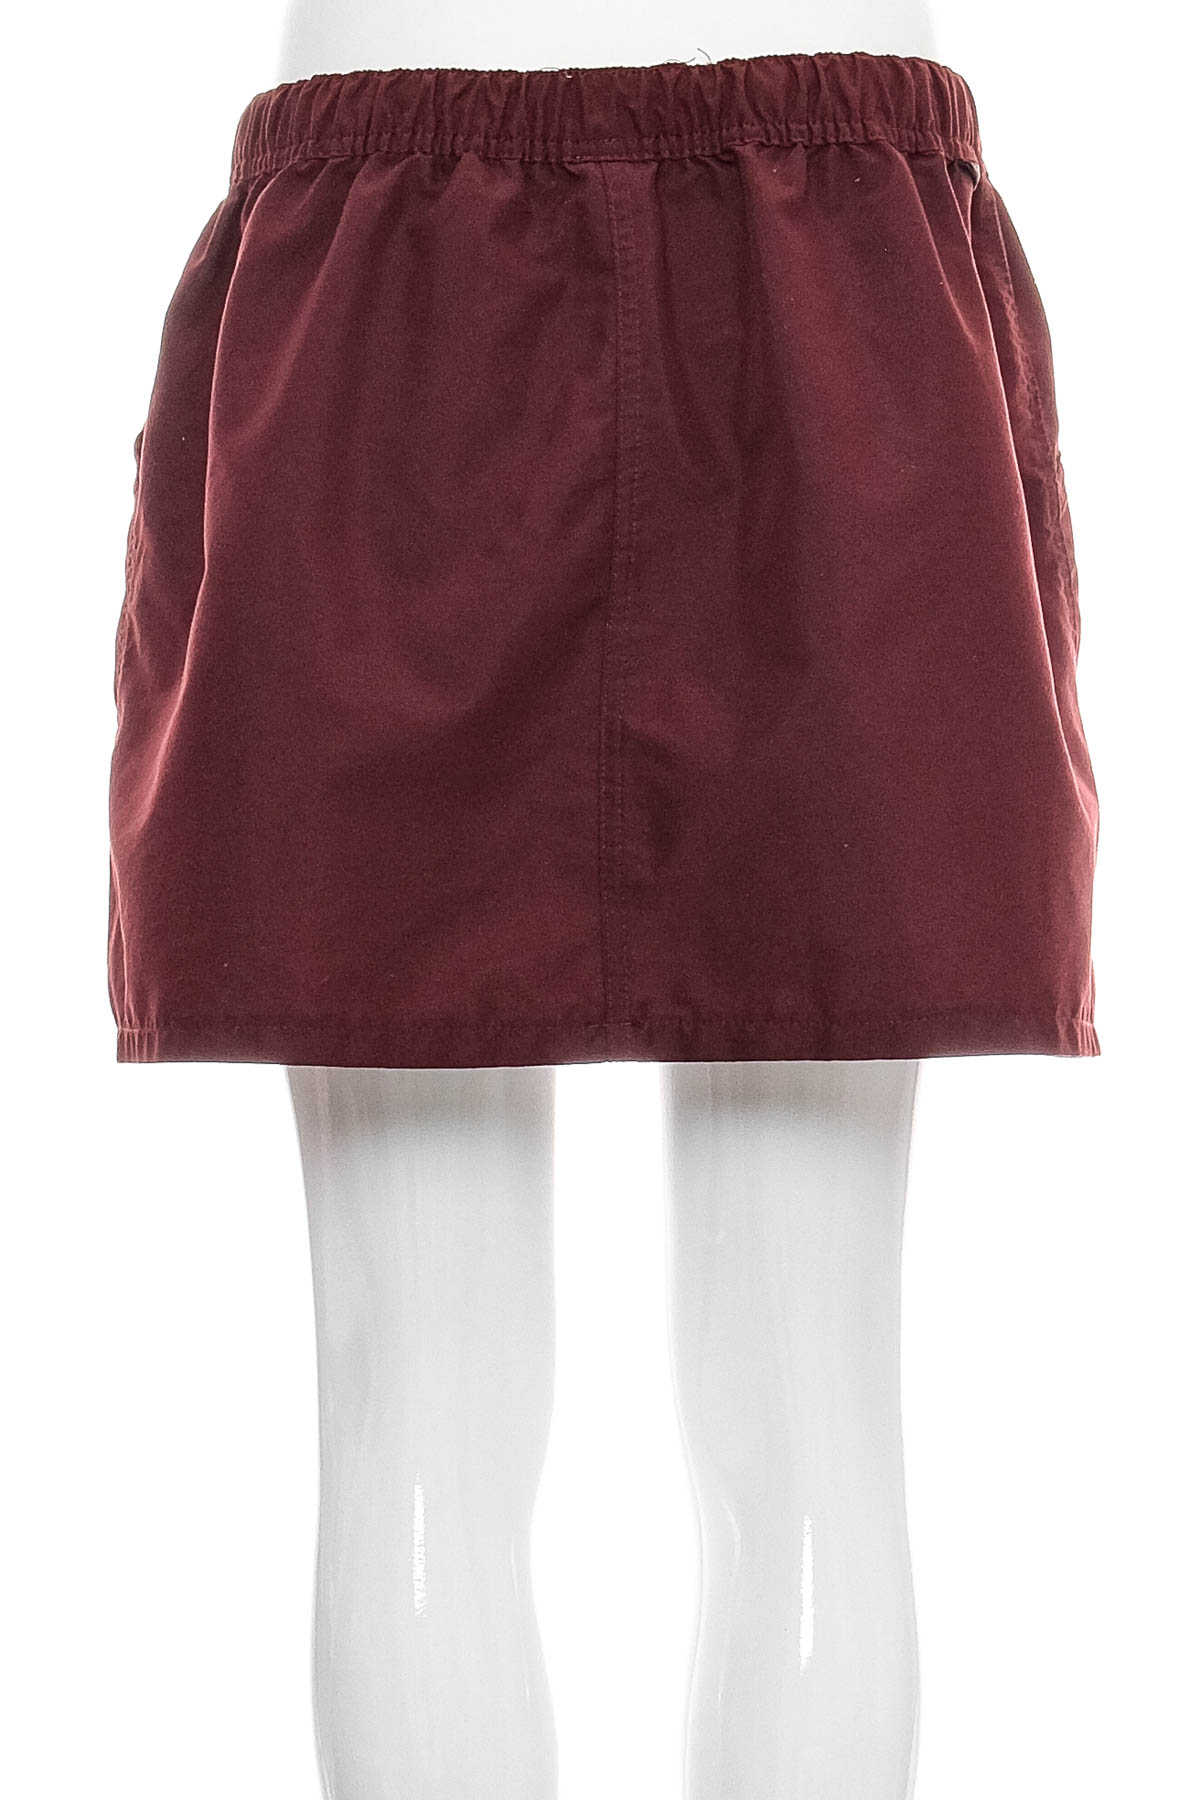 Skirt - pants - DECATHLON - 1